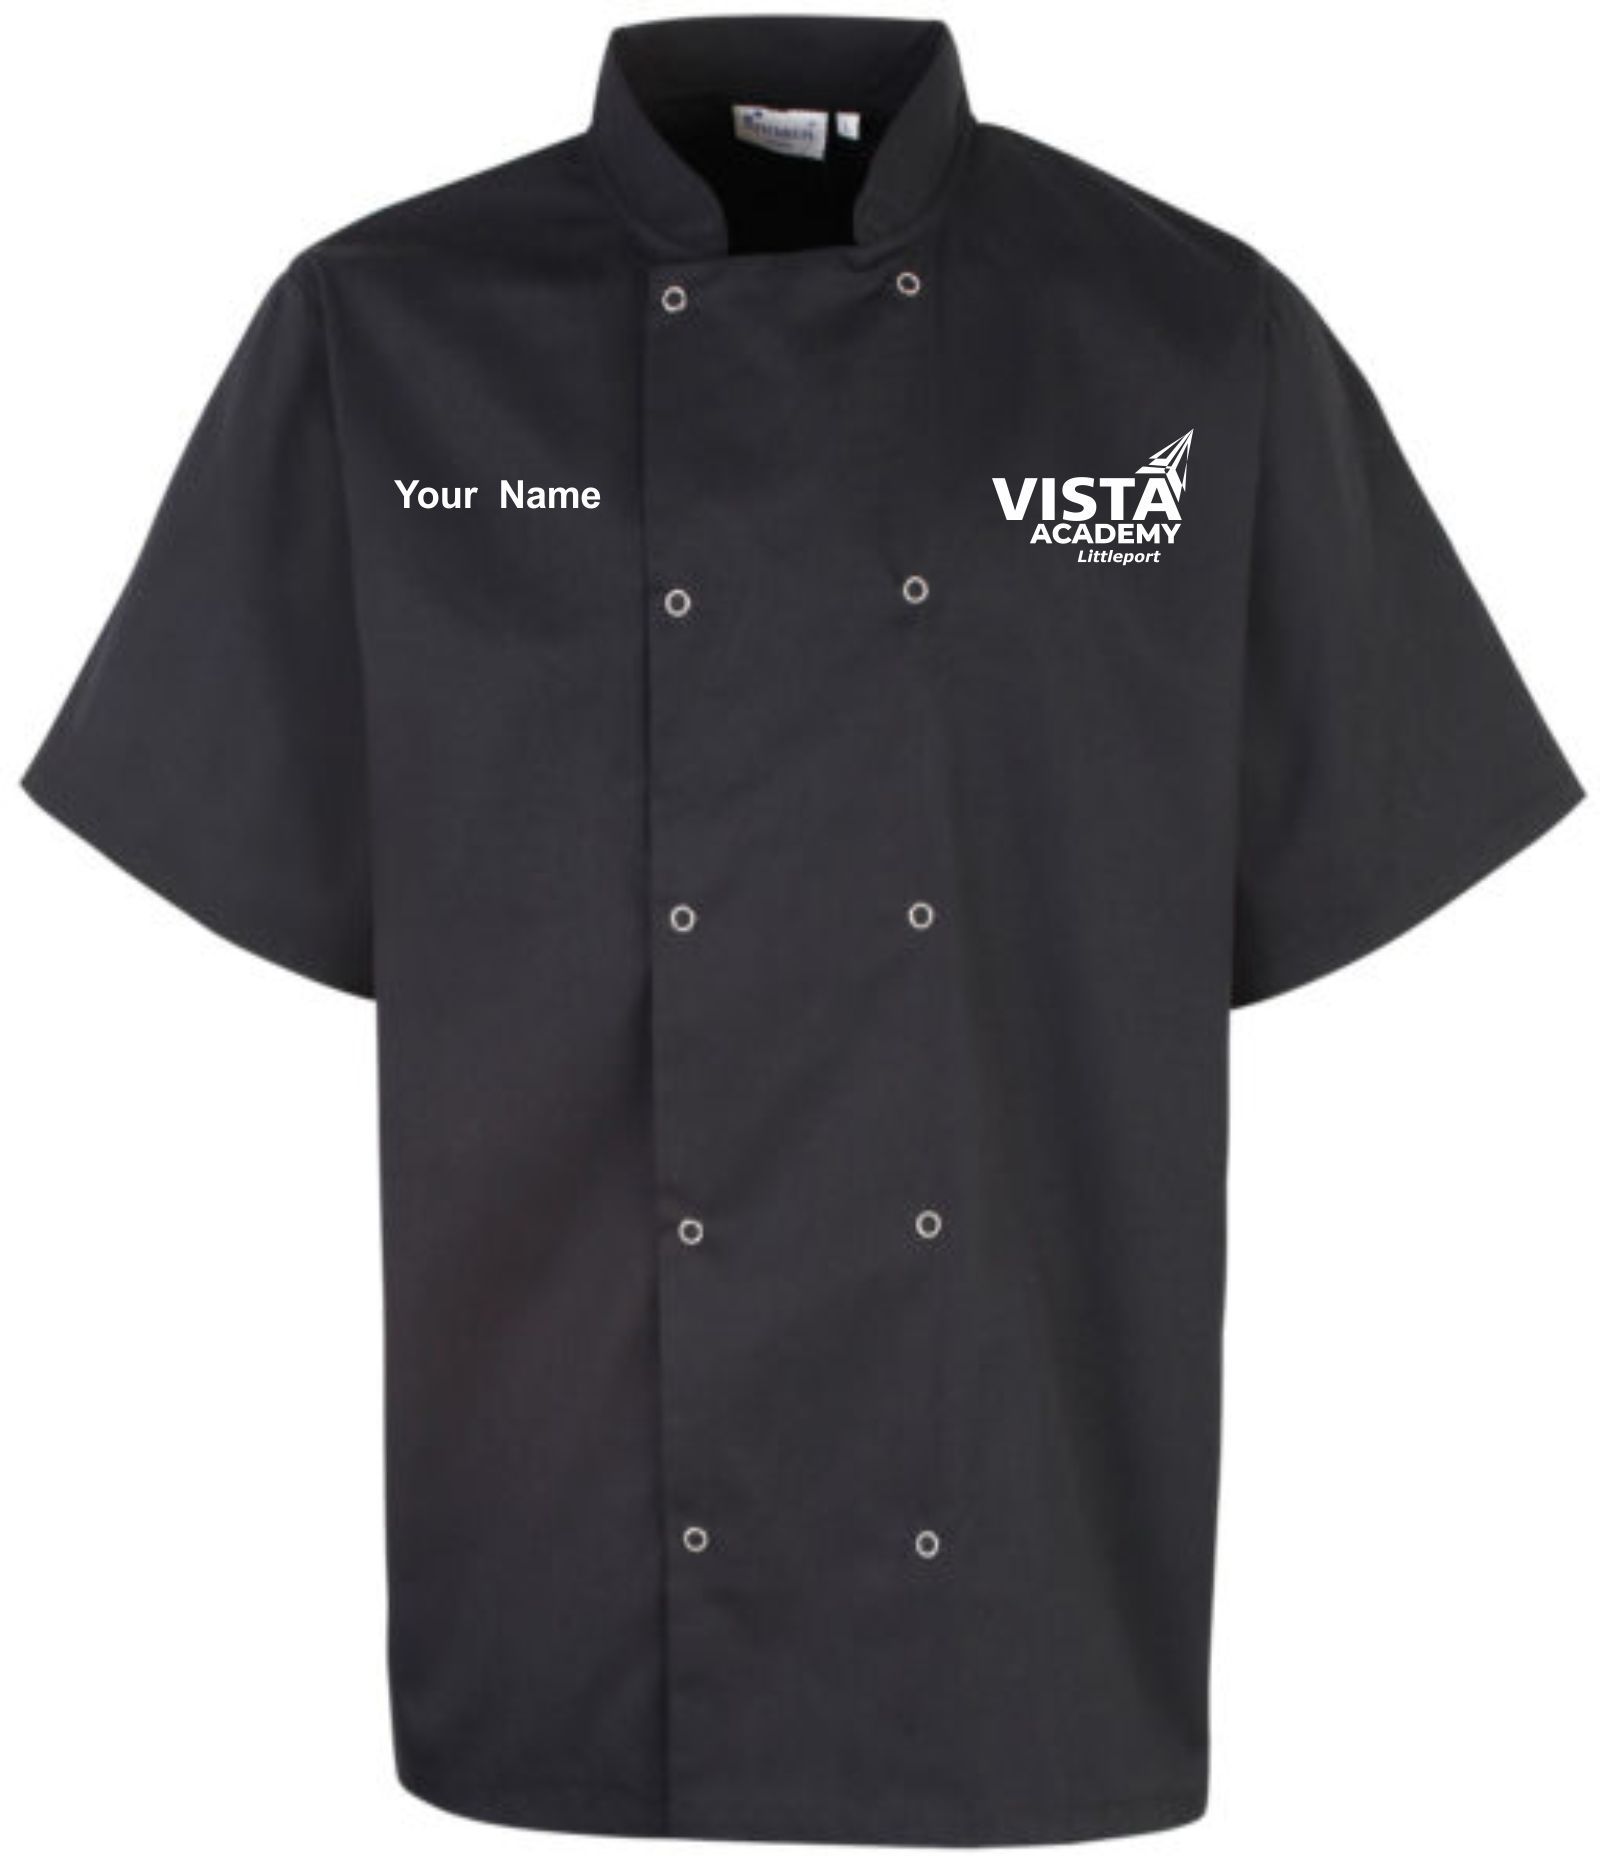 Vista Academy Littleport - Studded Short Sleeve Chef Jacket